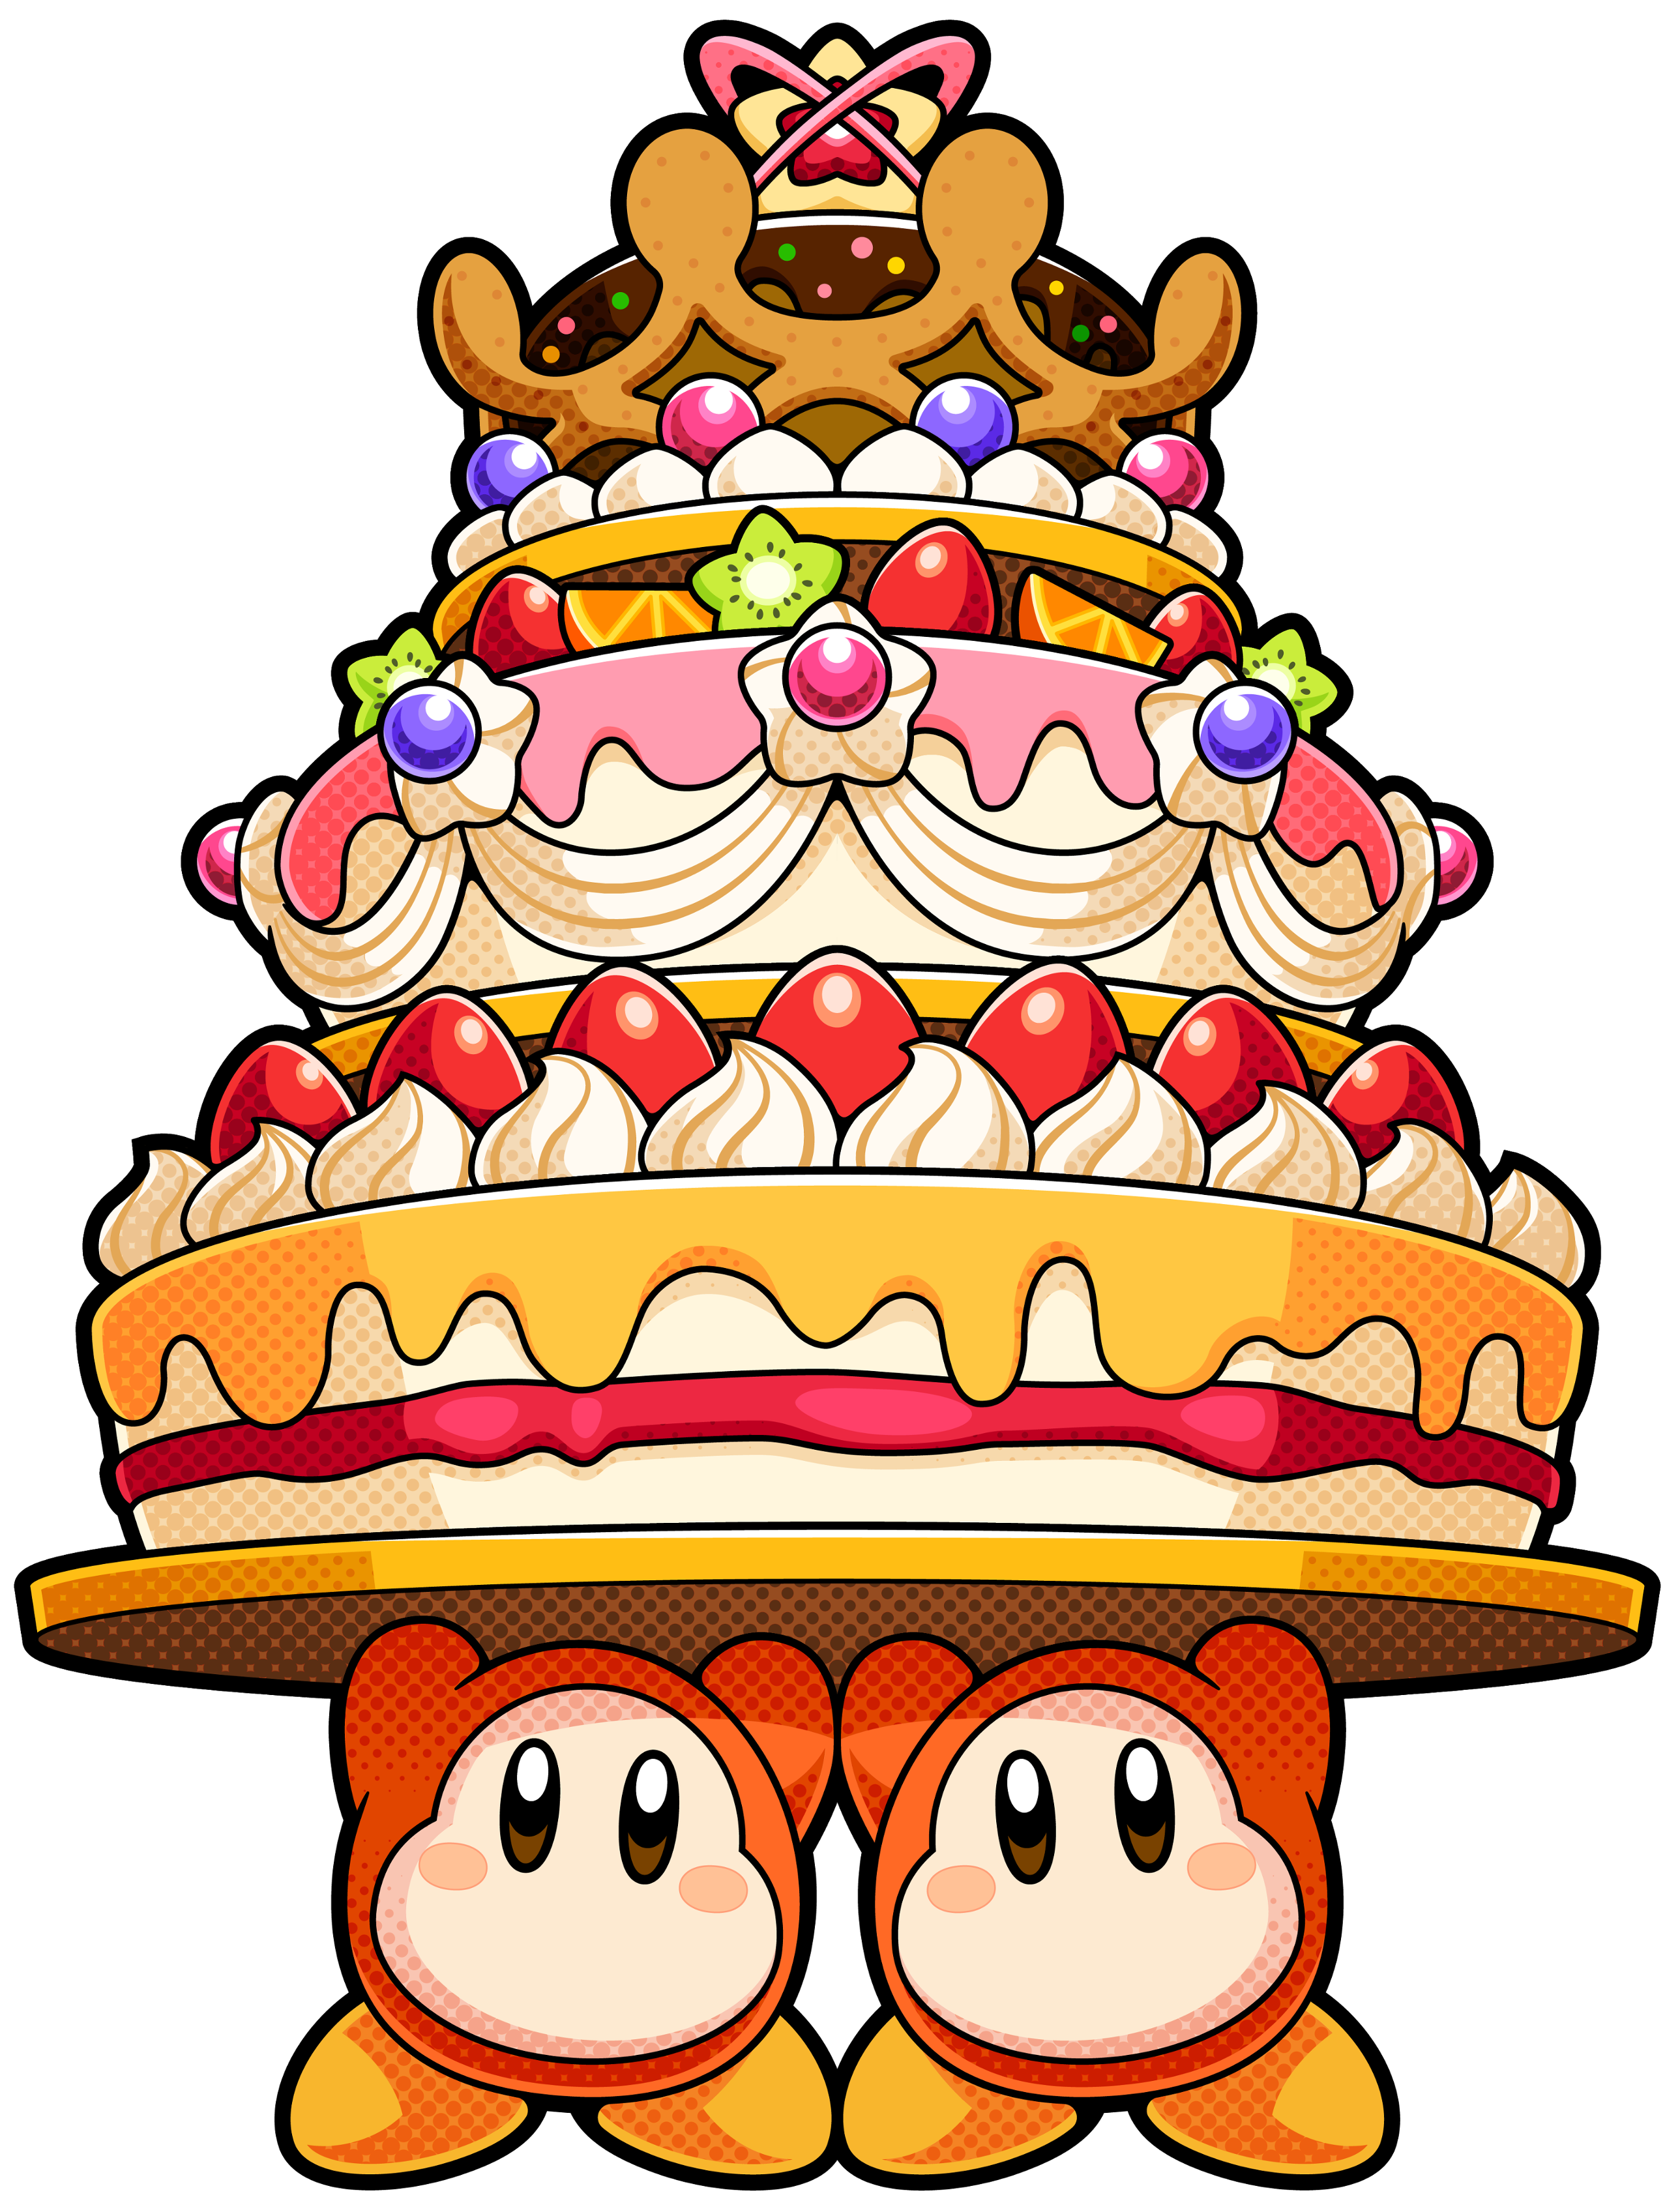 The Cake Royale | Kirby Wiki | Fandom